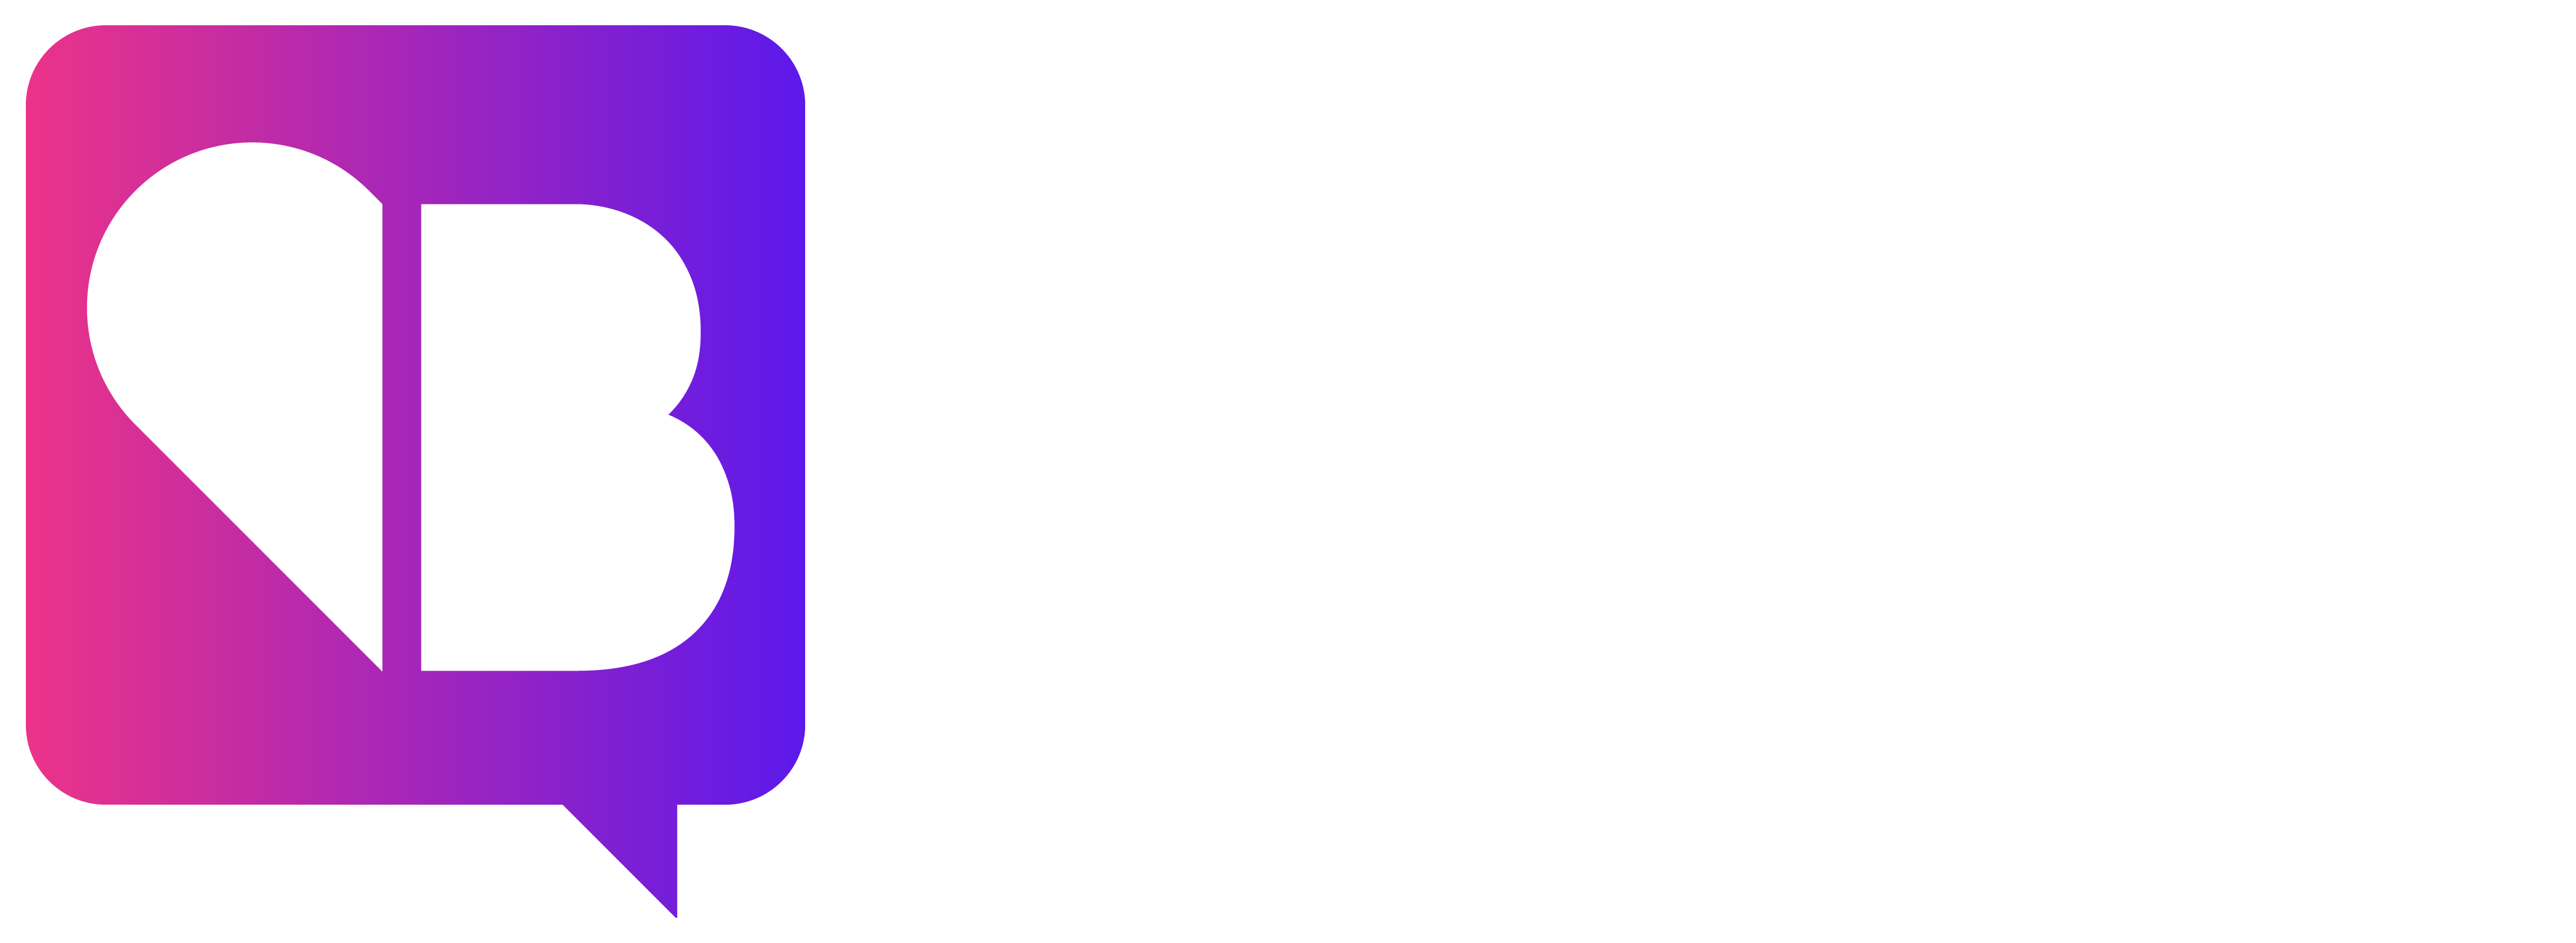 LoveBrands Digital